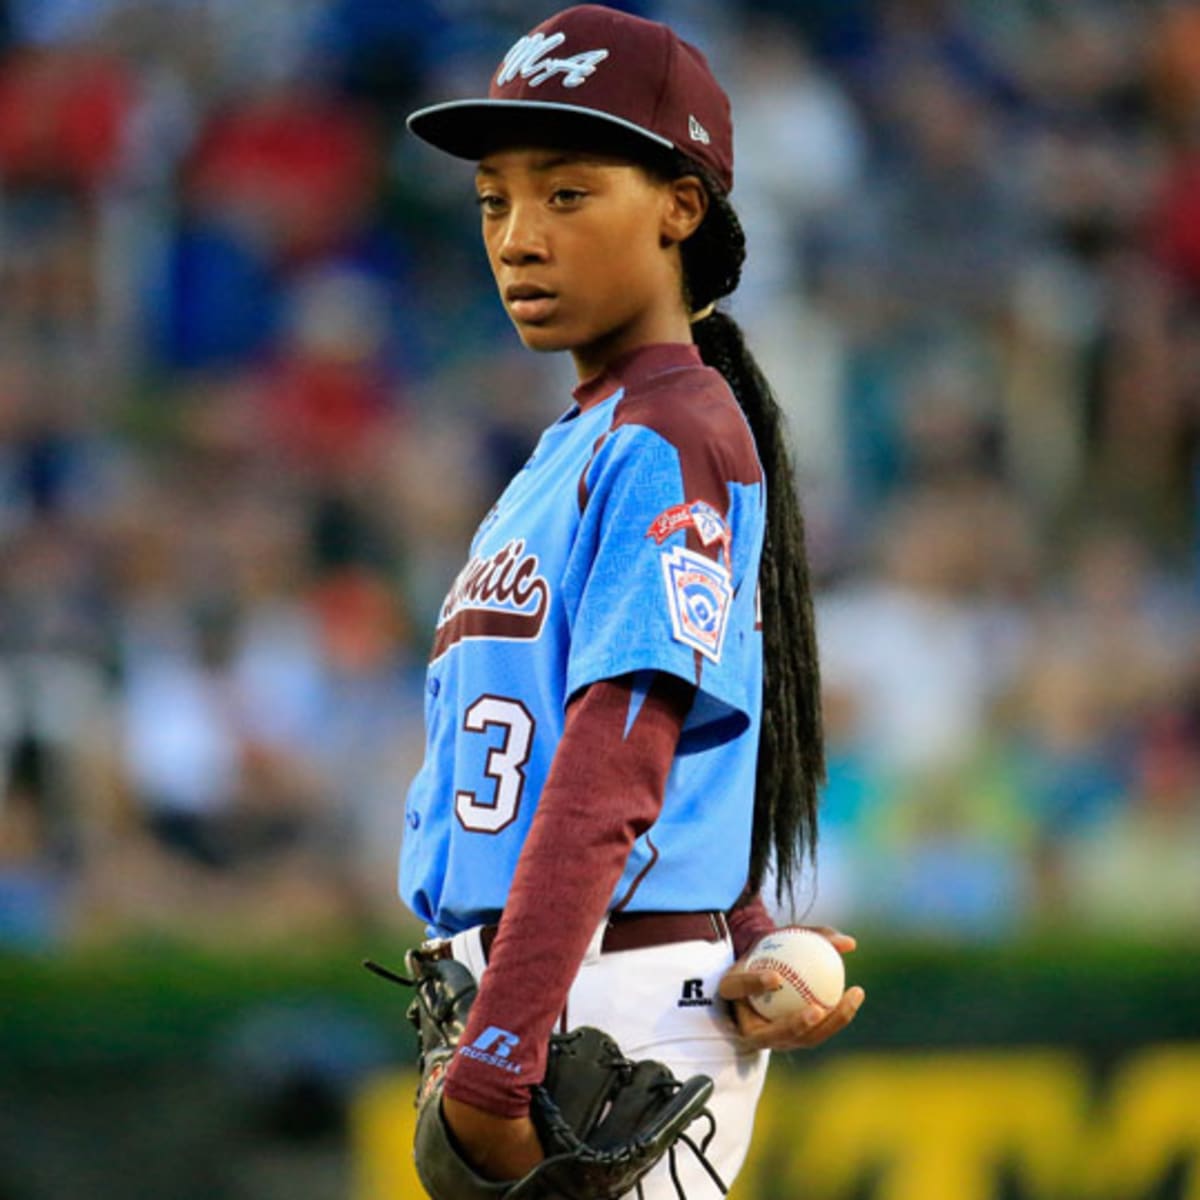 Mo'ne Davis to donate jersey from Little League World Series